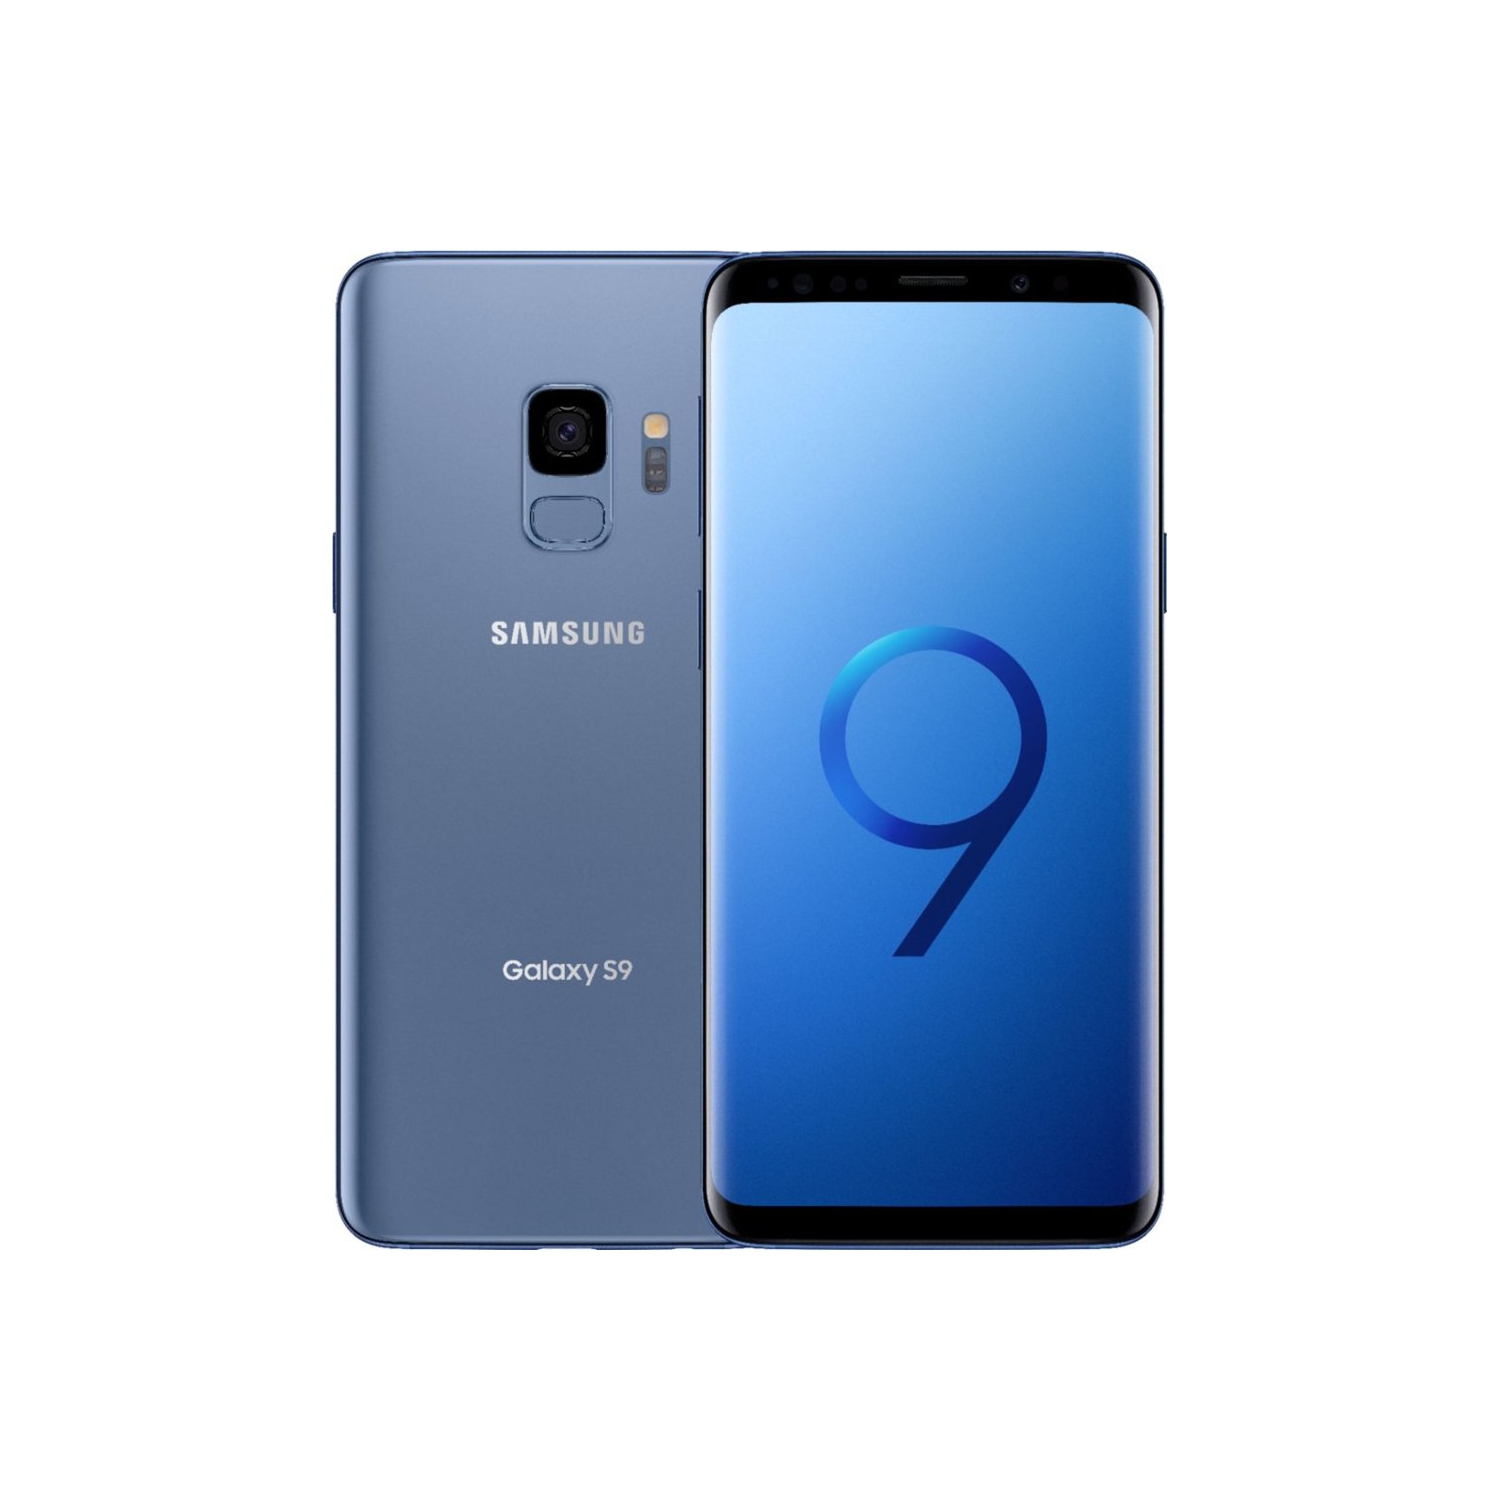 Refurbished (Excellent) - Samsung Galaxy S9 64GB Smartphone - Coral Blue - Unlocked - Certified Refurbished